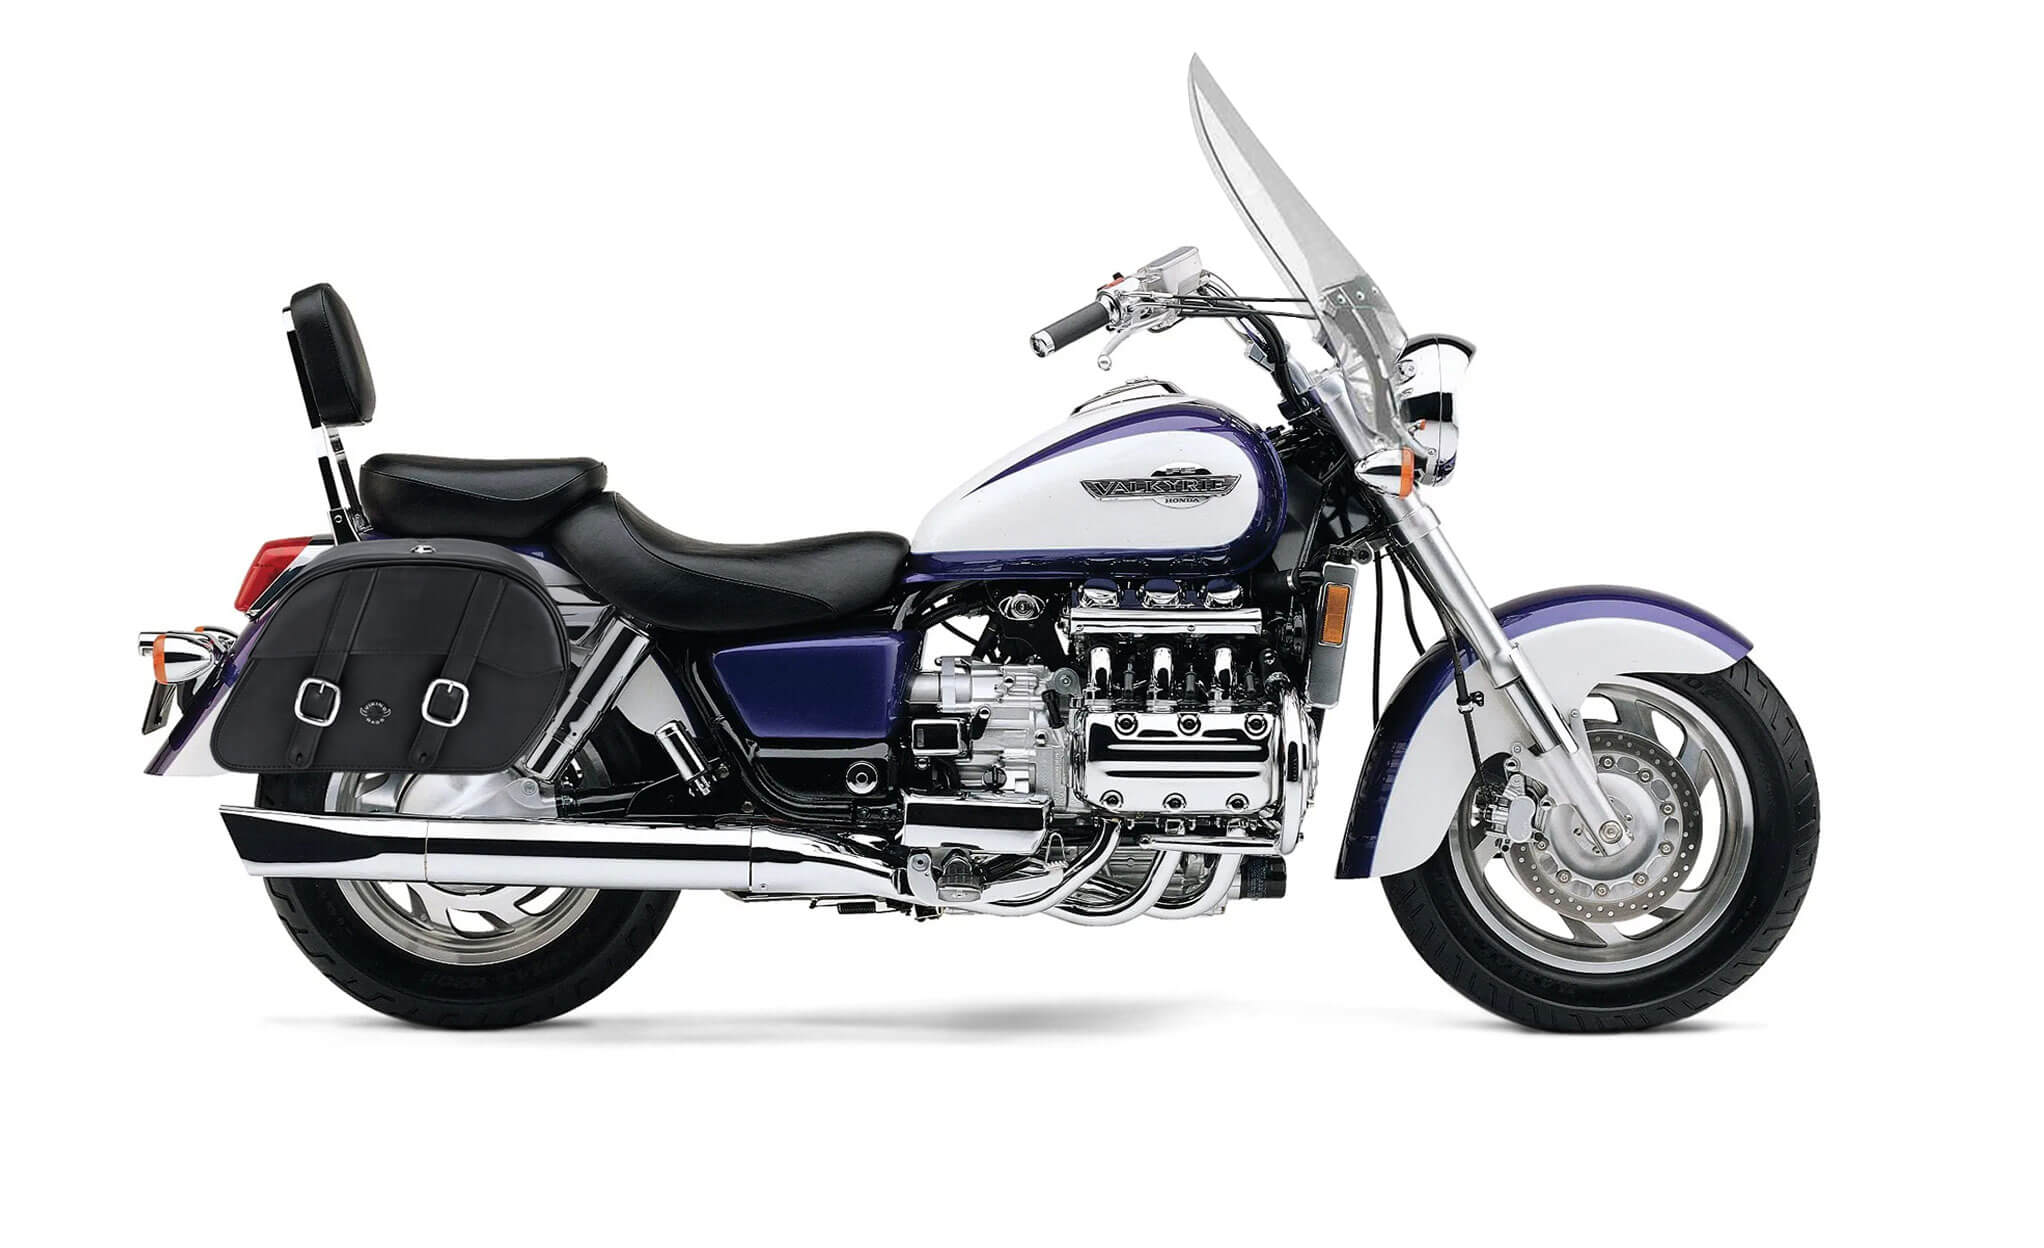 Viking Skarner Large Honda Valkyrie 1500 Tourer Leather Motorcycle Saddlebags on Bike Photo @expand